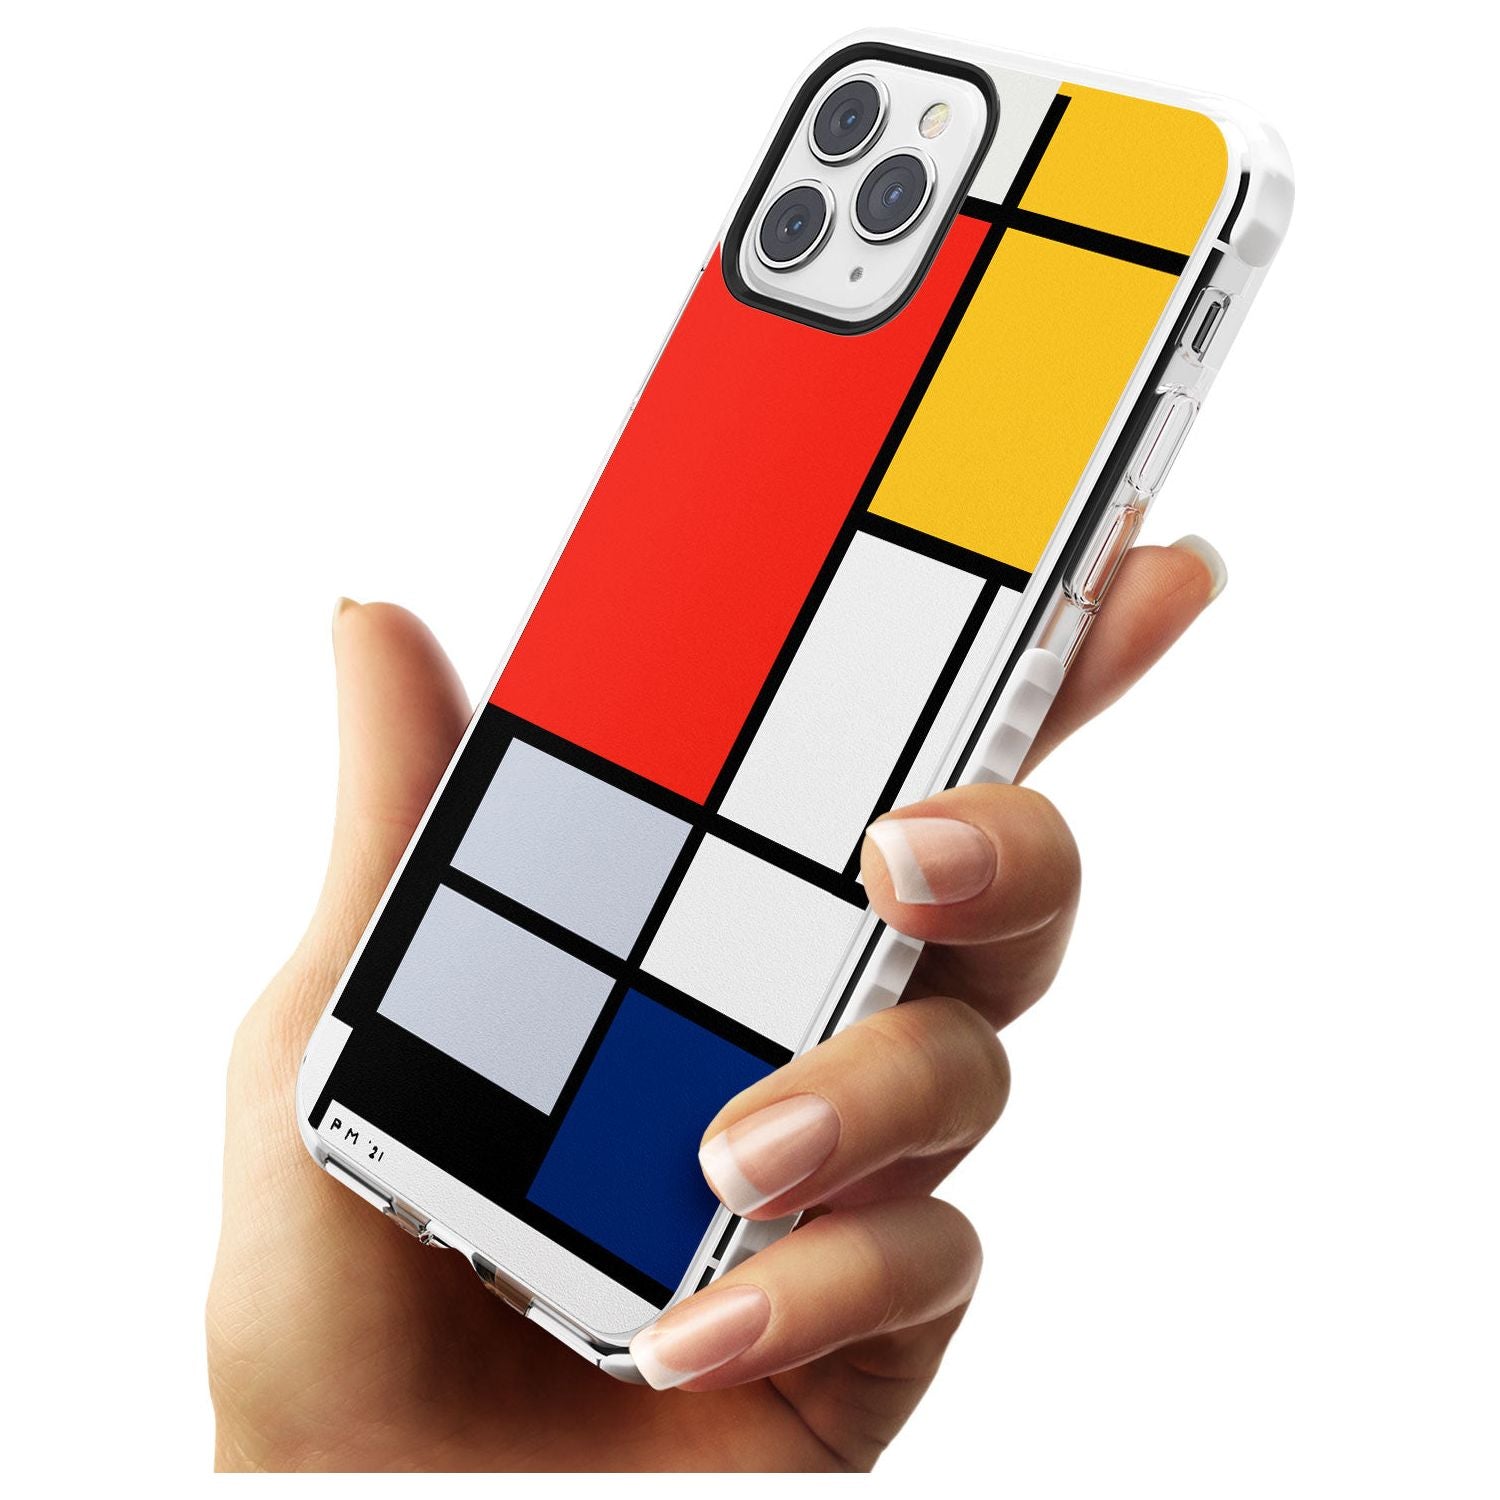 Piet Mondrian's Composition Impact Phone Case for iPhone 11 Pro Max